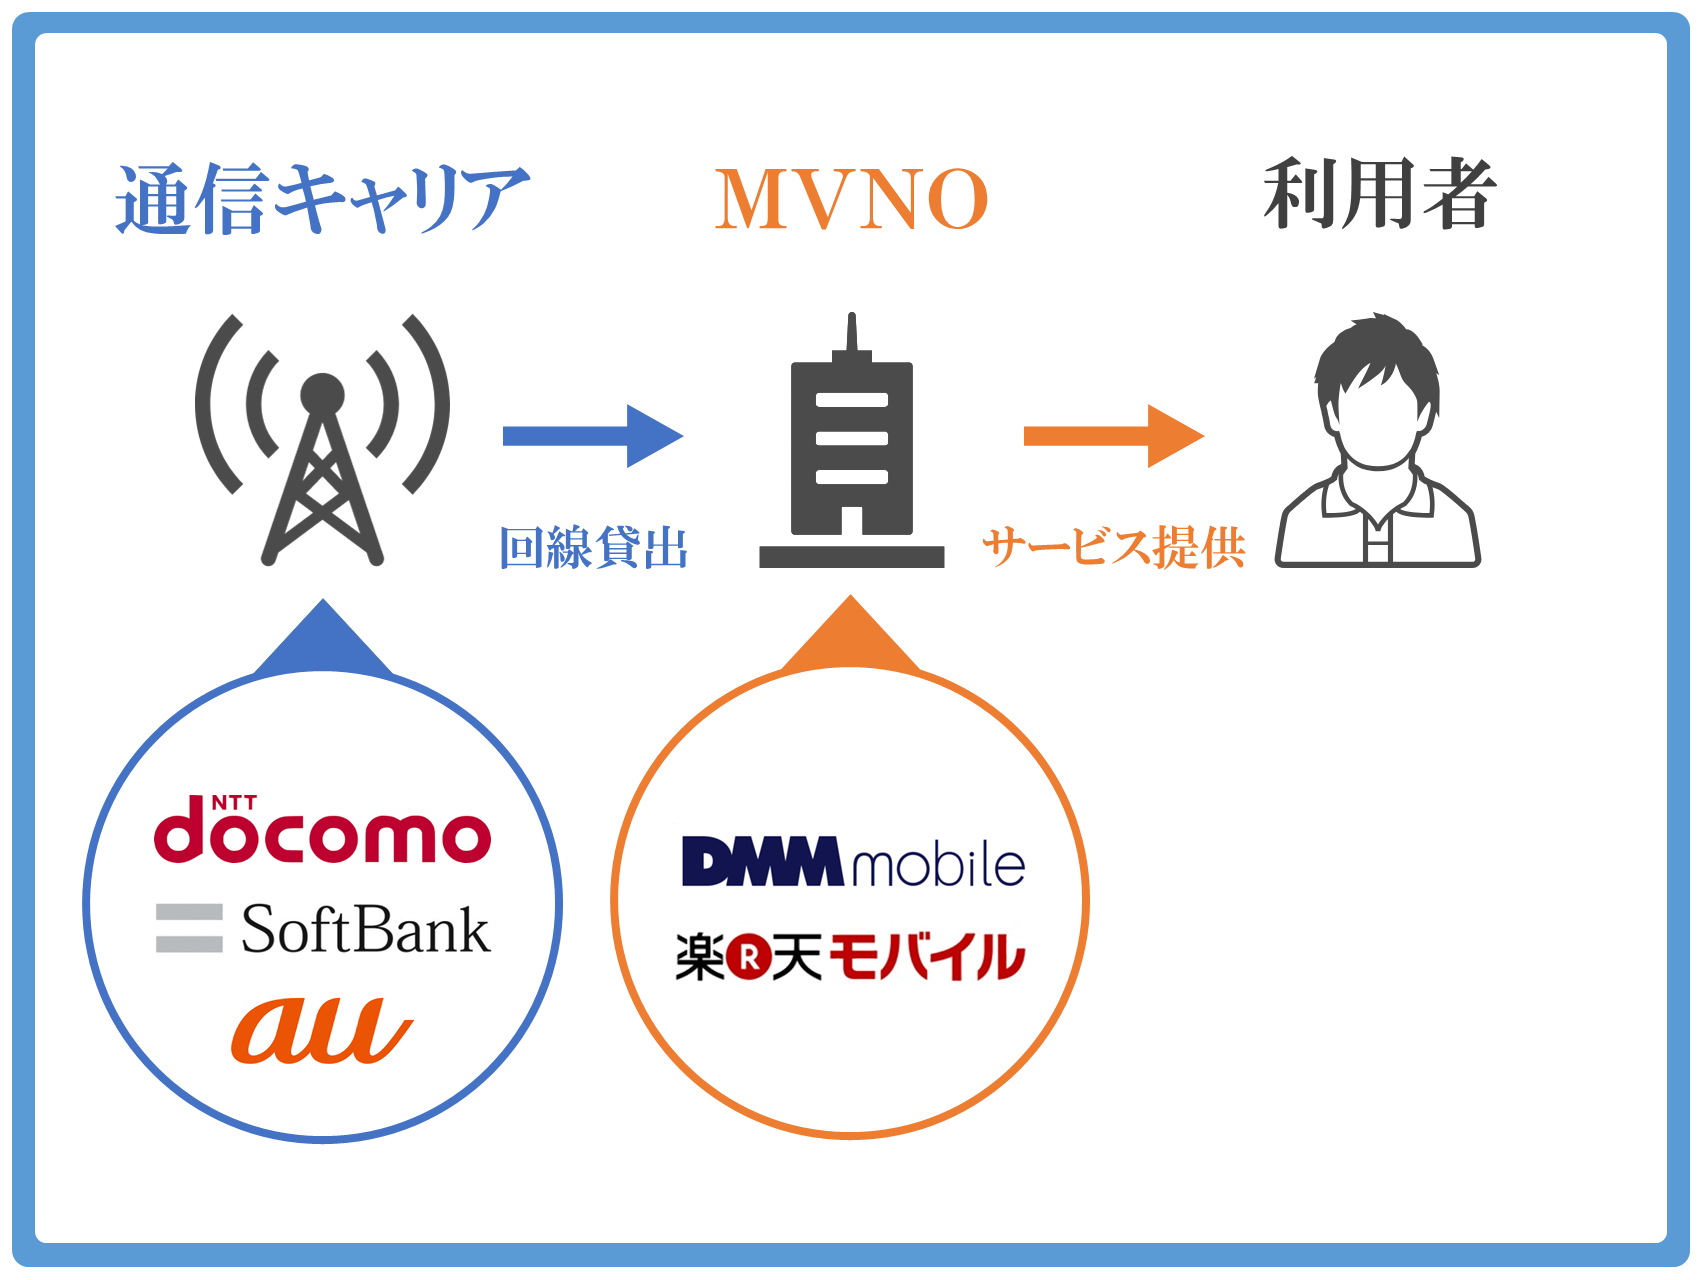 MVNOは通信キャリアから回線を借りている通信事業者のこと